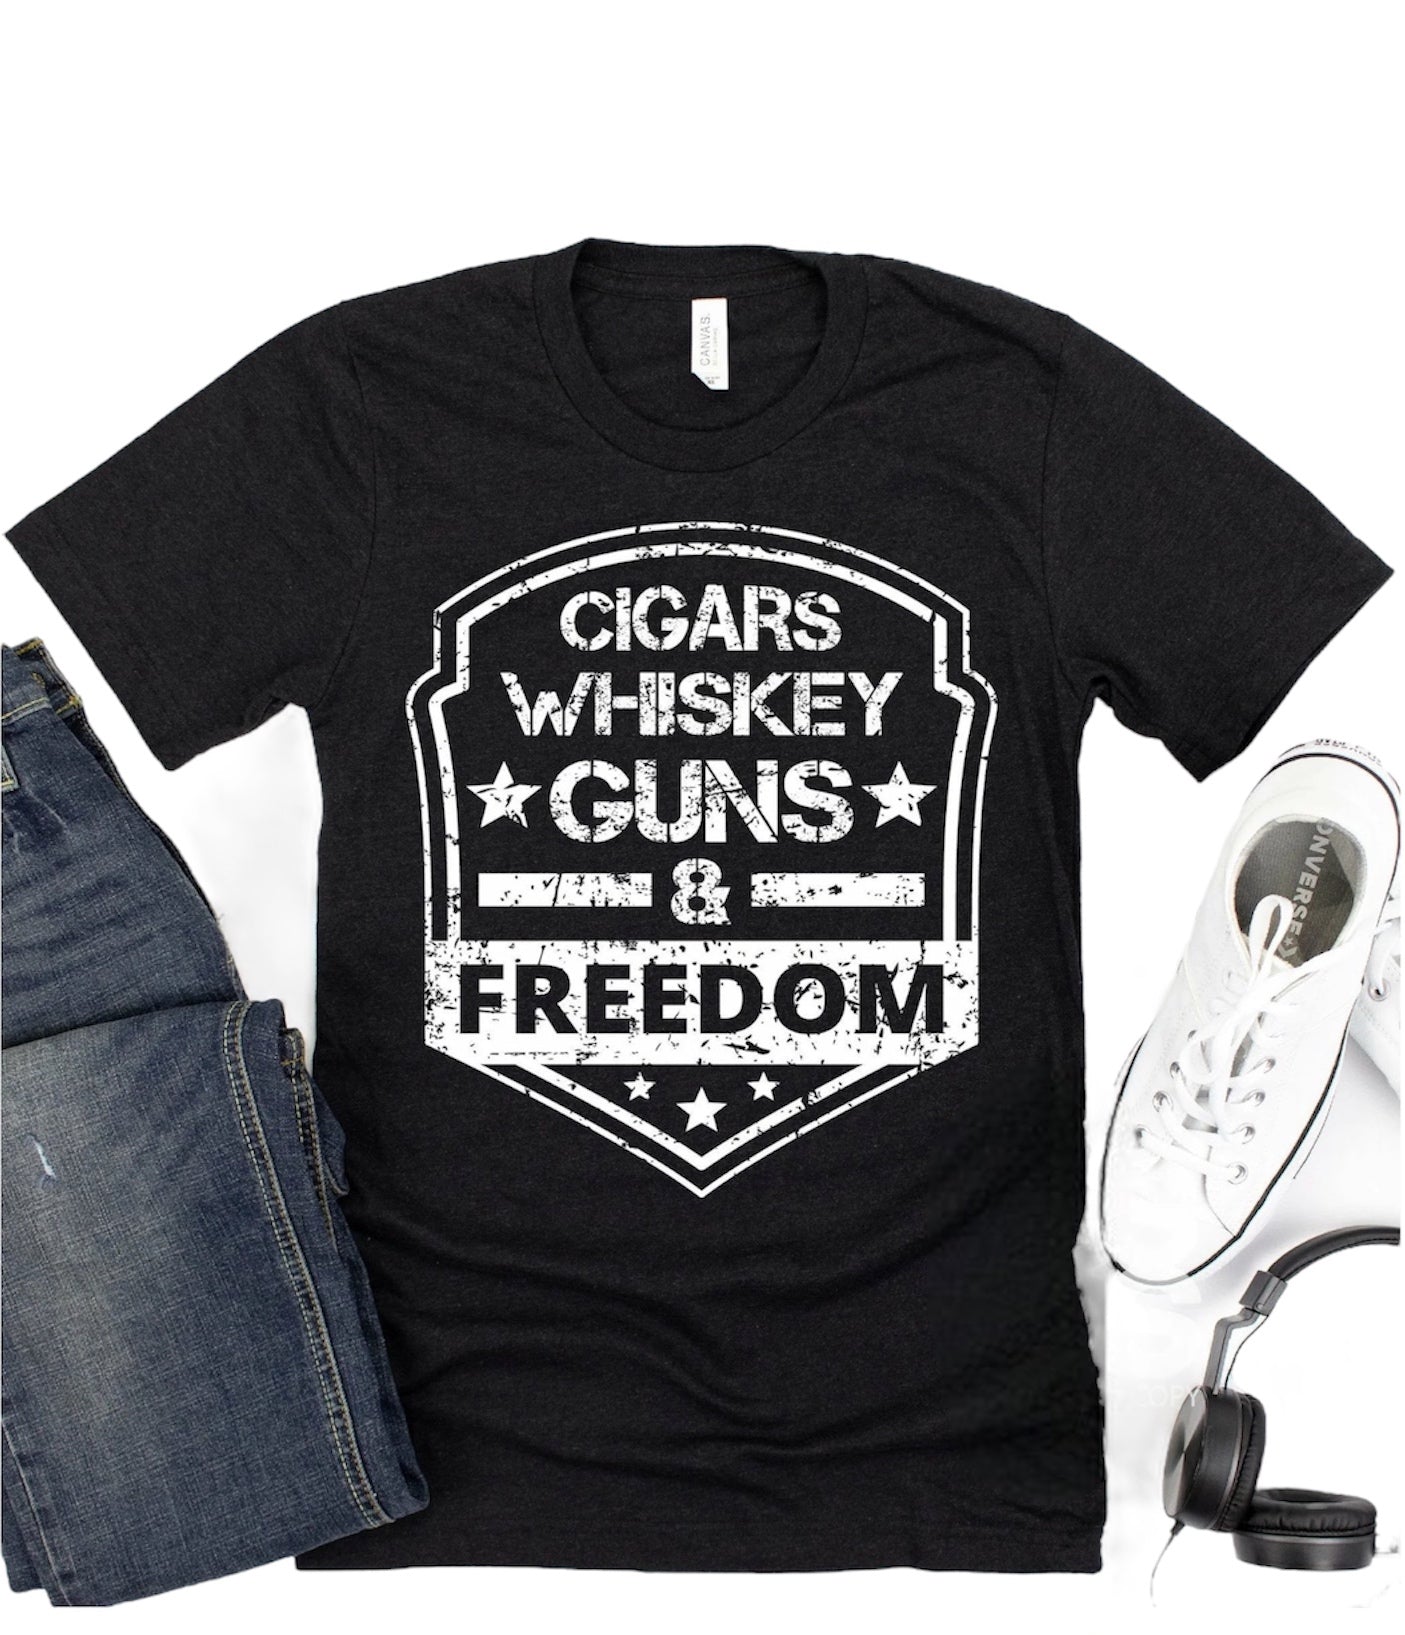 Cigars Whiskey Guns & Freedom tee